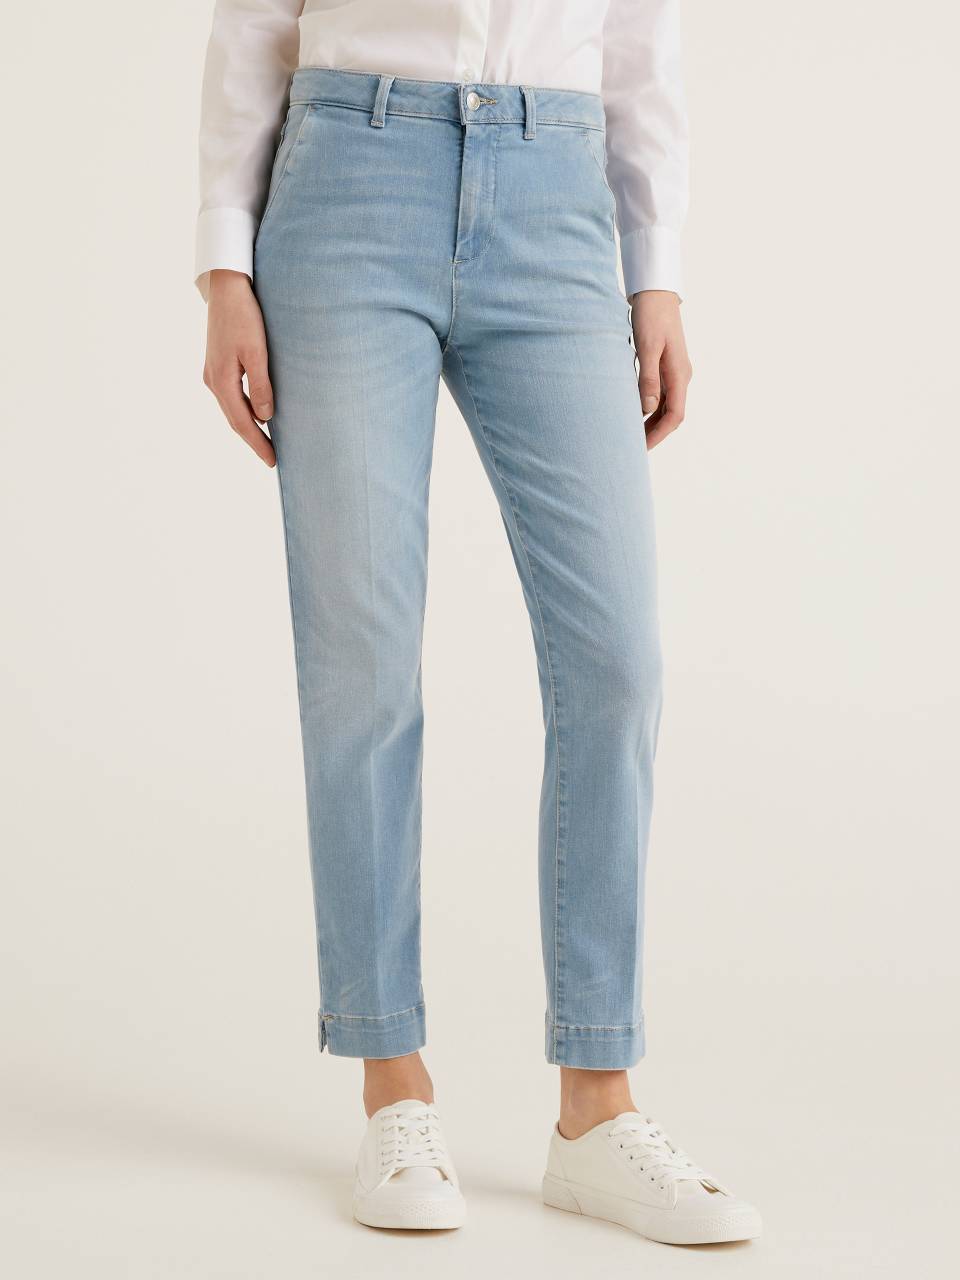 White/Green 38                  EU Bershka straight jeans discount 65% WOMEN FASHION Jeans Straight jeans Print 